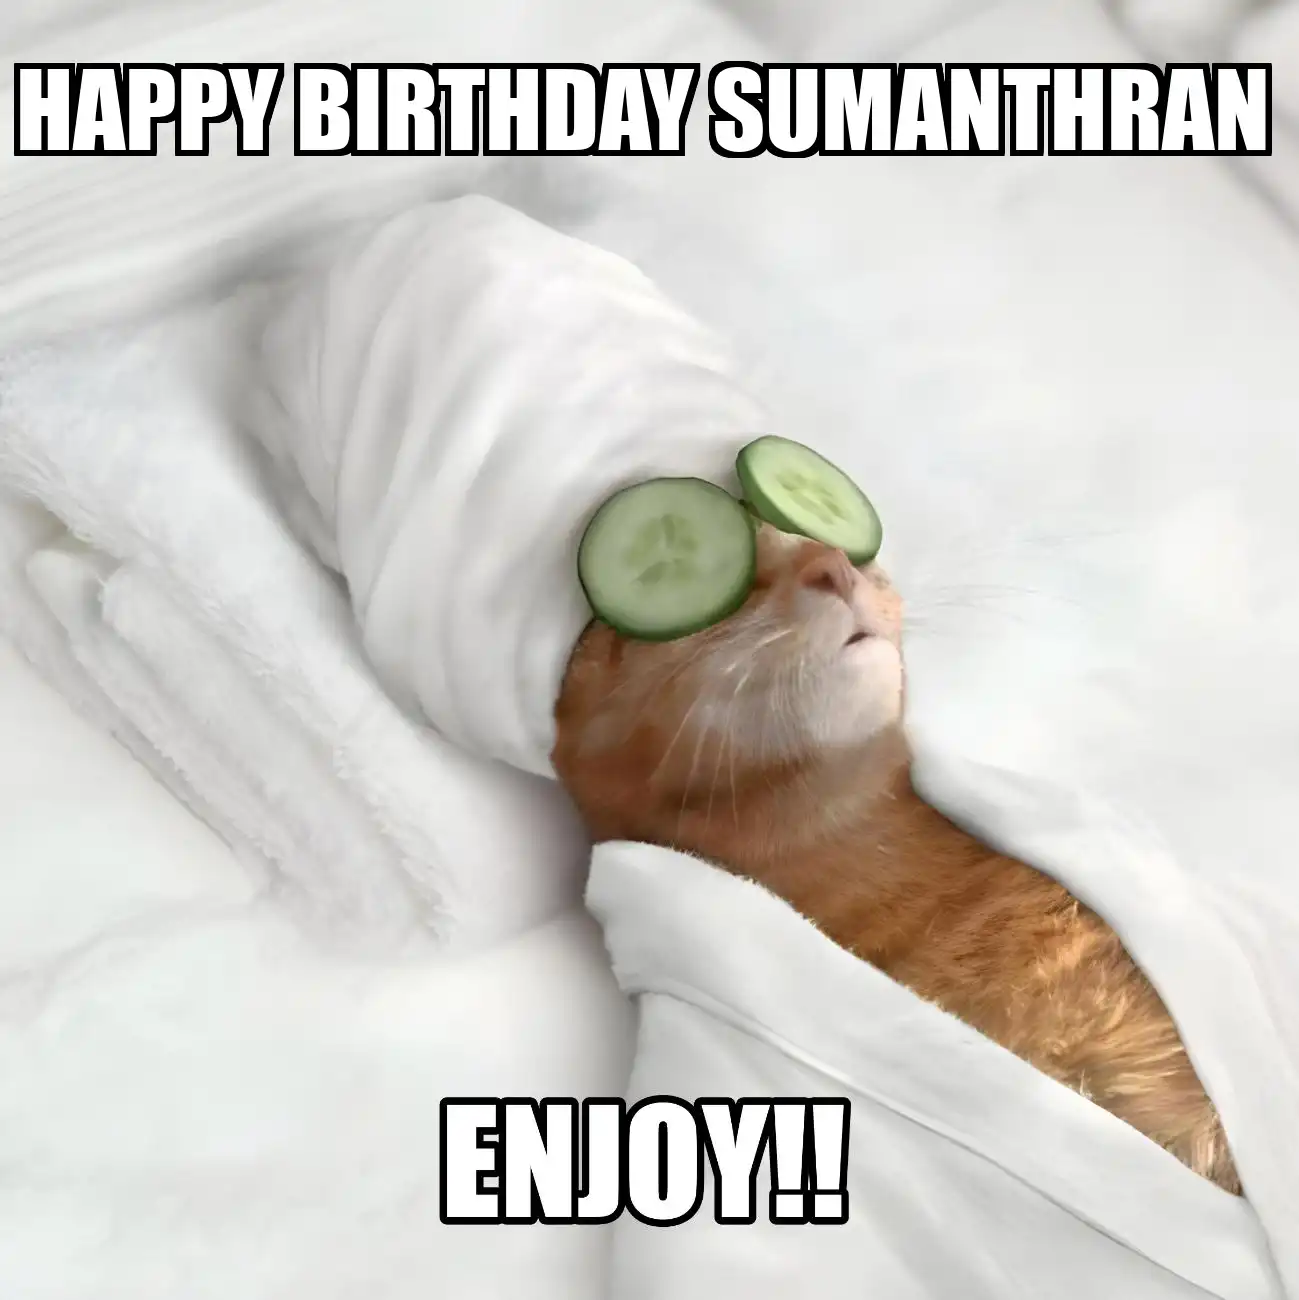 Happy Birthday Sumanthran Enjoy Cat Meme